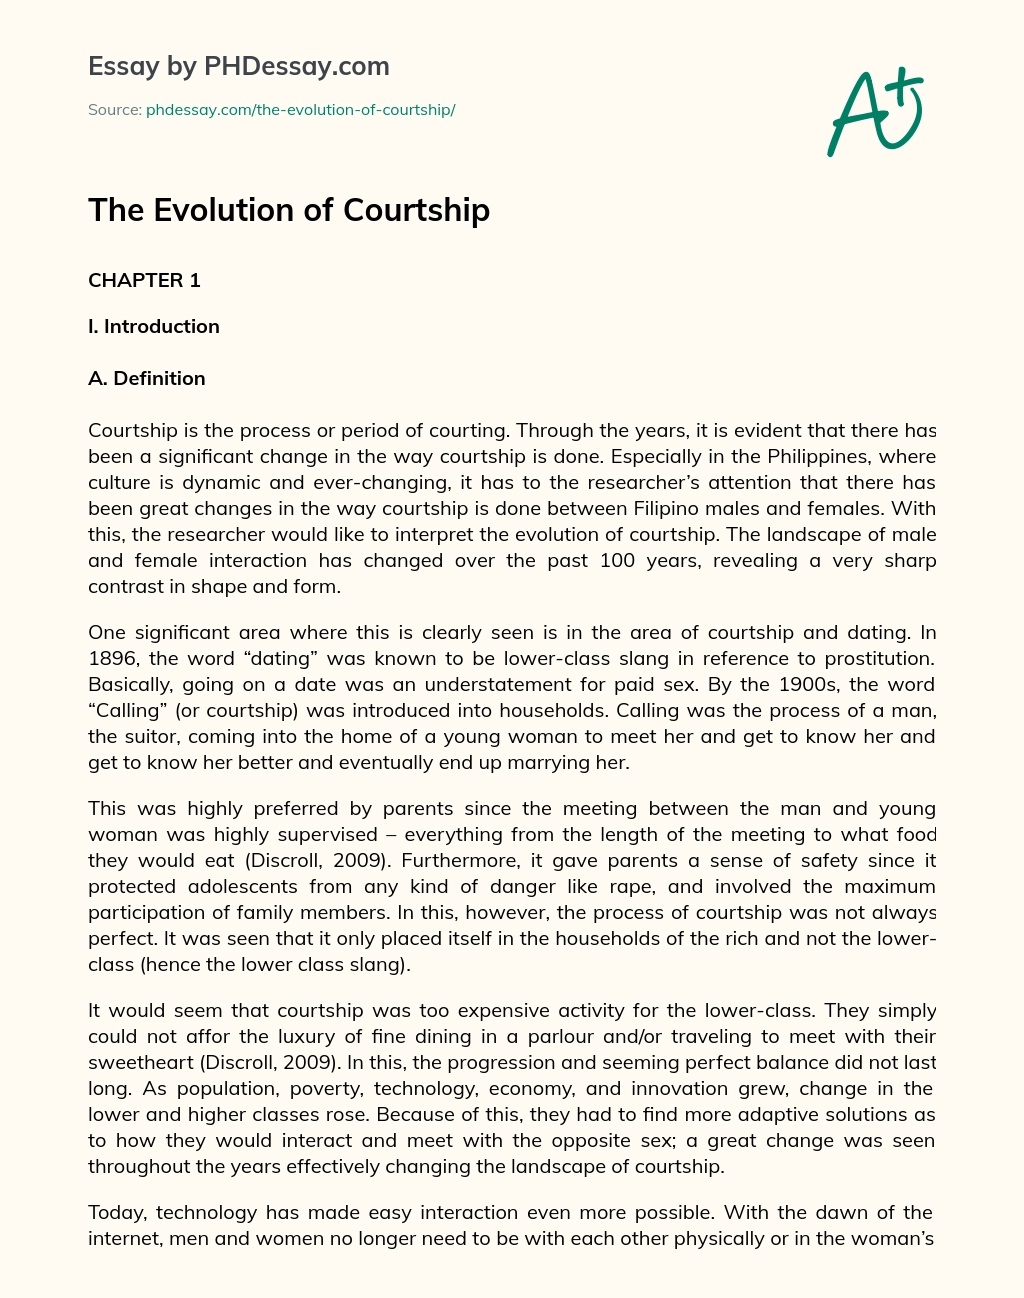 The Evolution of Courtship essay